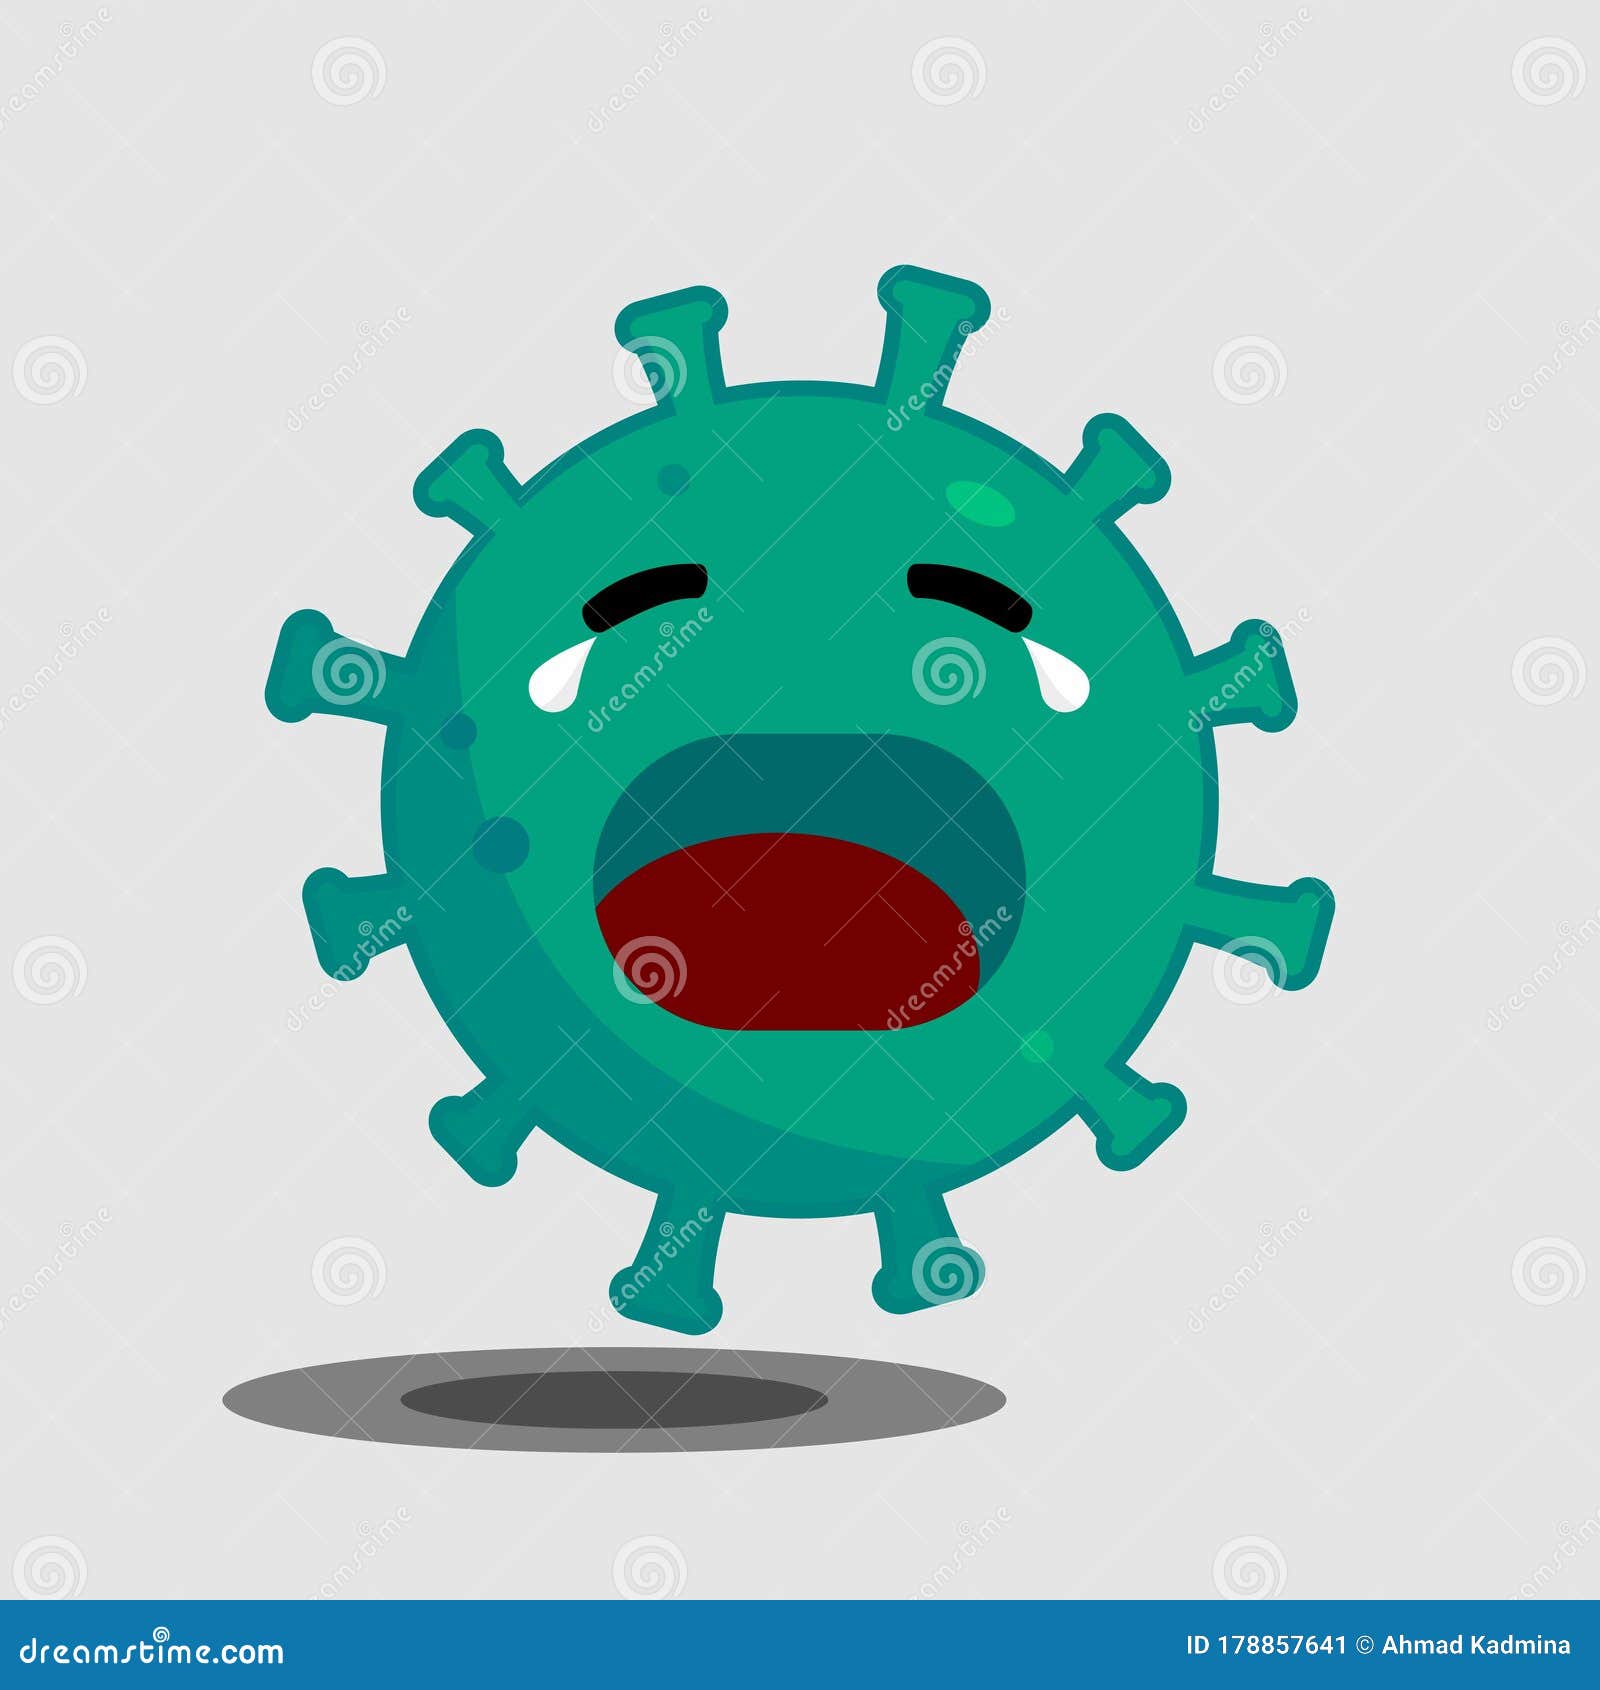   grapich   graphic of cute coronavirus expresion